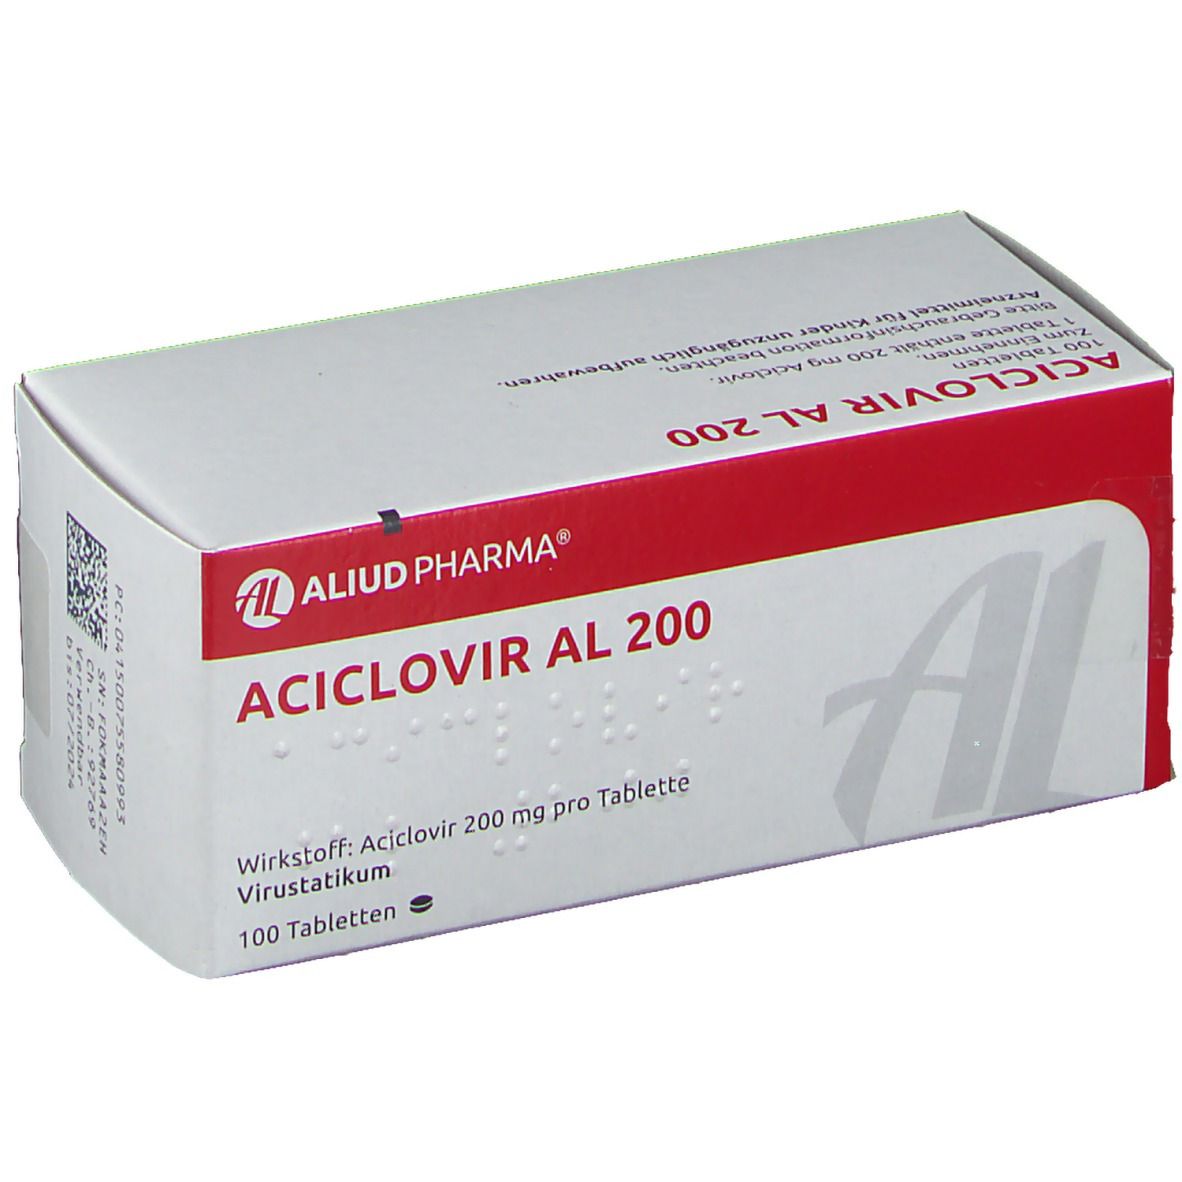 Aciclovir AL 200